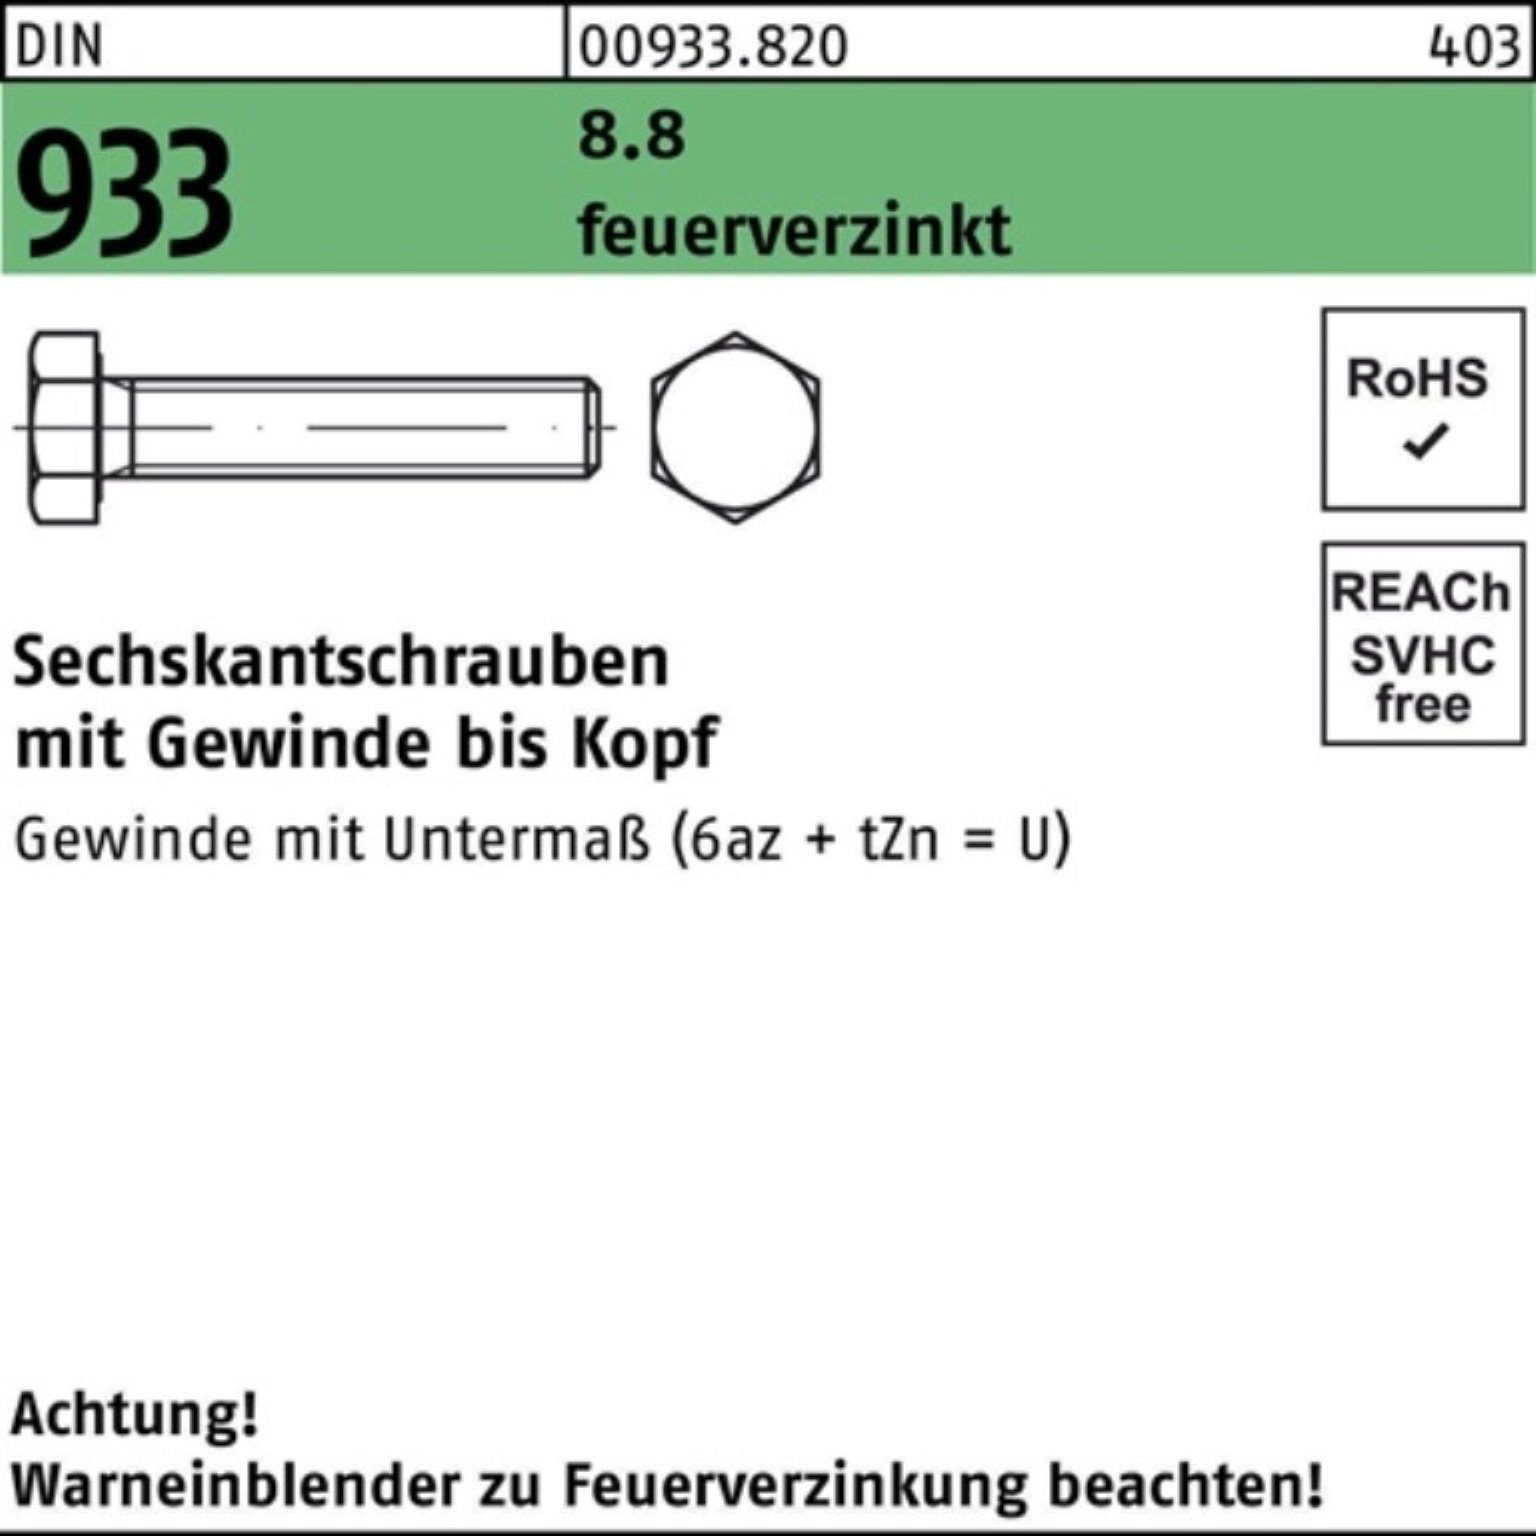 Reyher Sechskantschraube 100er Sechskantschraube feuerverz. 110 DIN 10 VG 933 M24x 8.8 St Pack